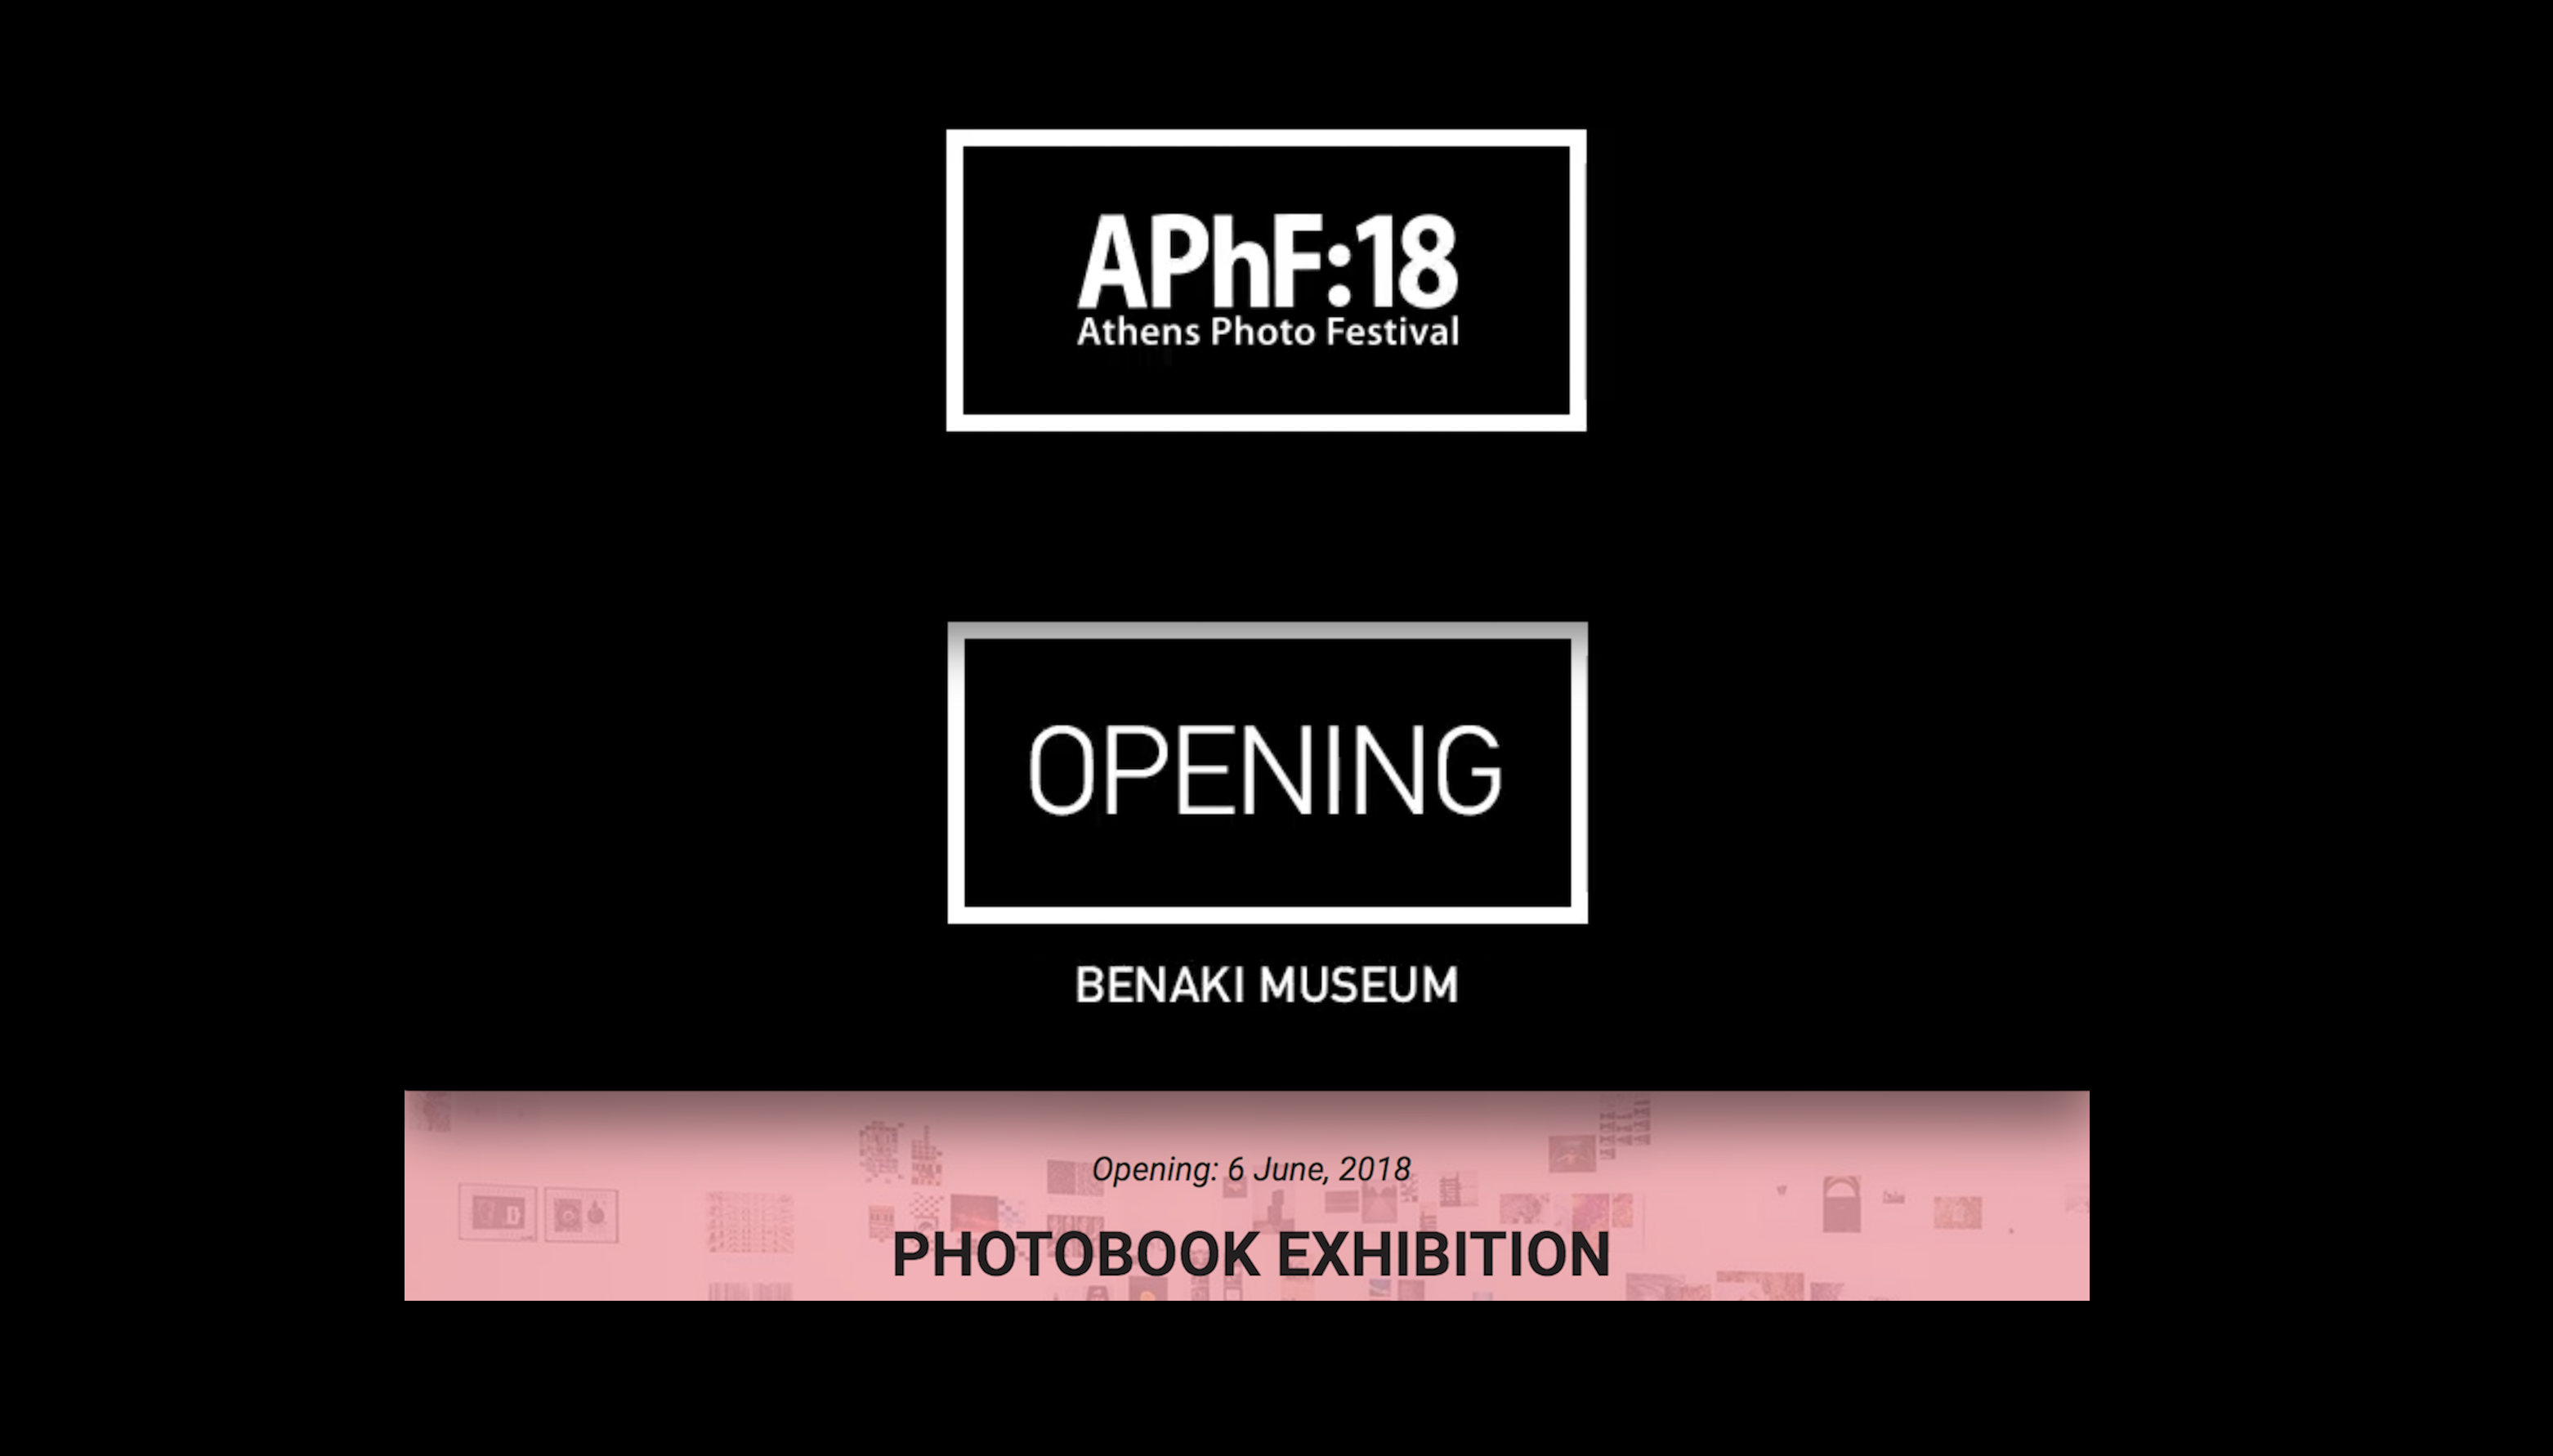 Athens Photo Festival 2018 Photobook Exhibition.